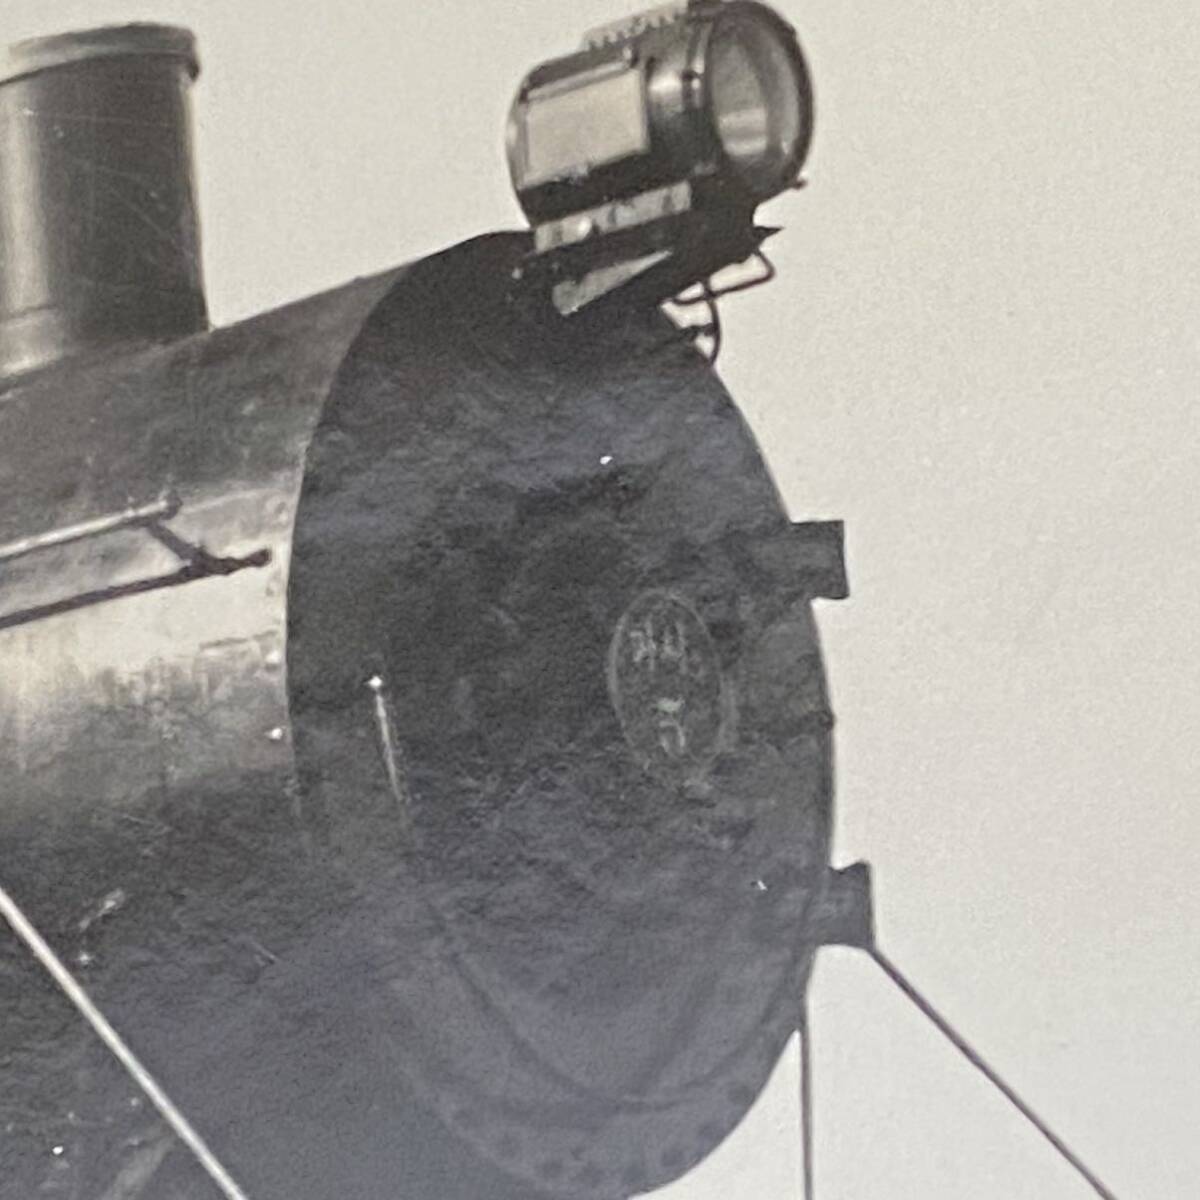 満鉄 南満洲鉄道 「パシコ」PASHIKO SL5勝利 古写真 白黒写真 パシコ型蒸気機関車 16.7×12cm 鉄道写真 _画像3